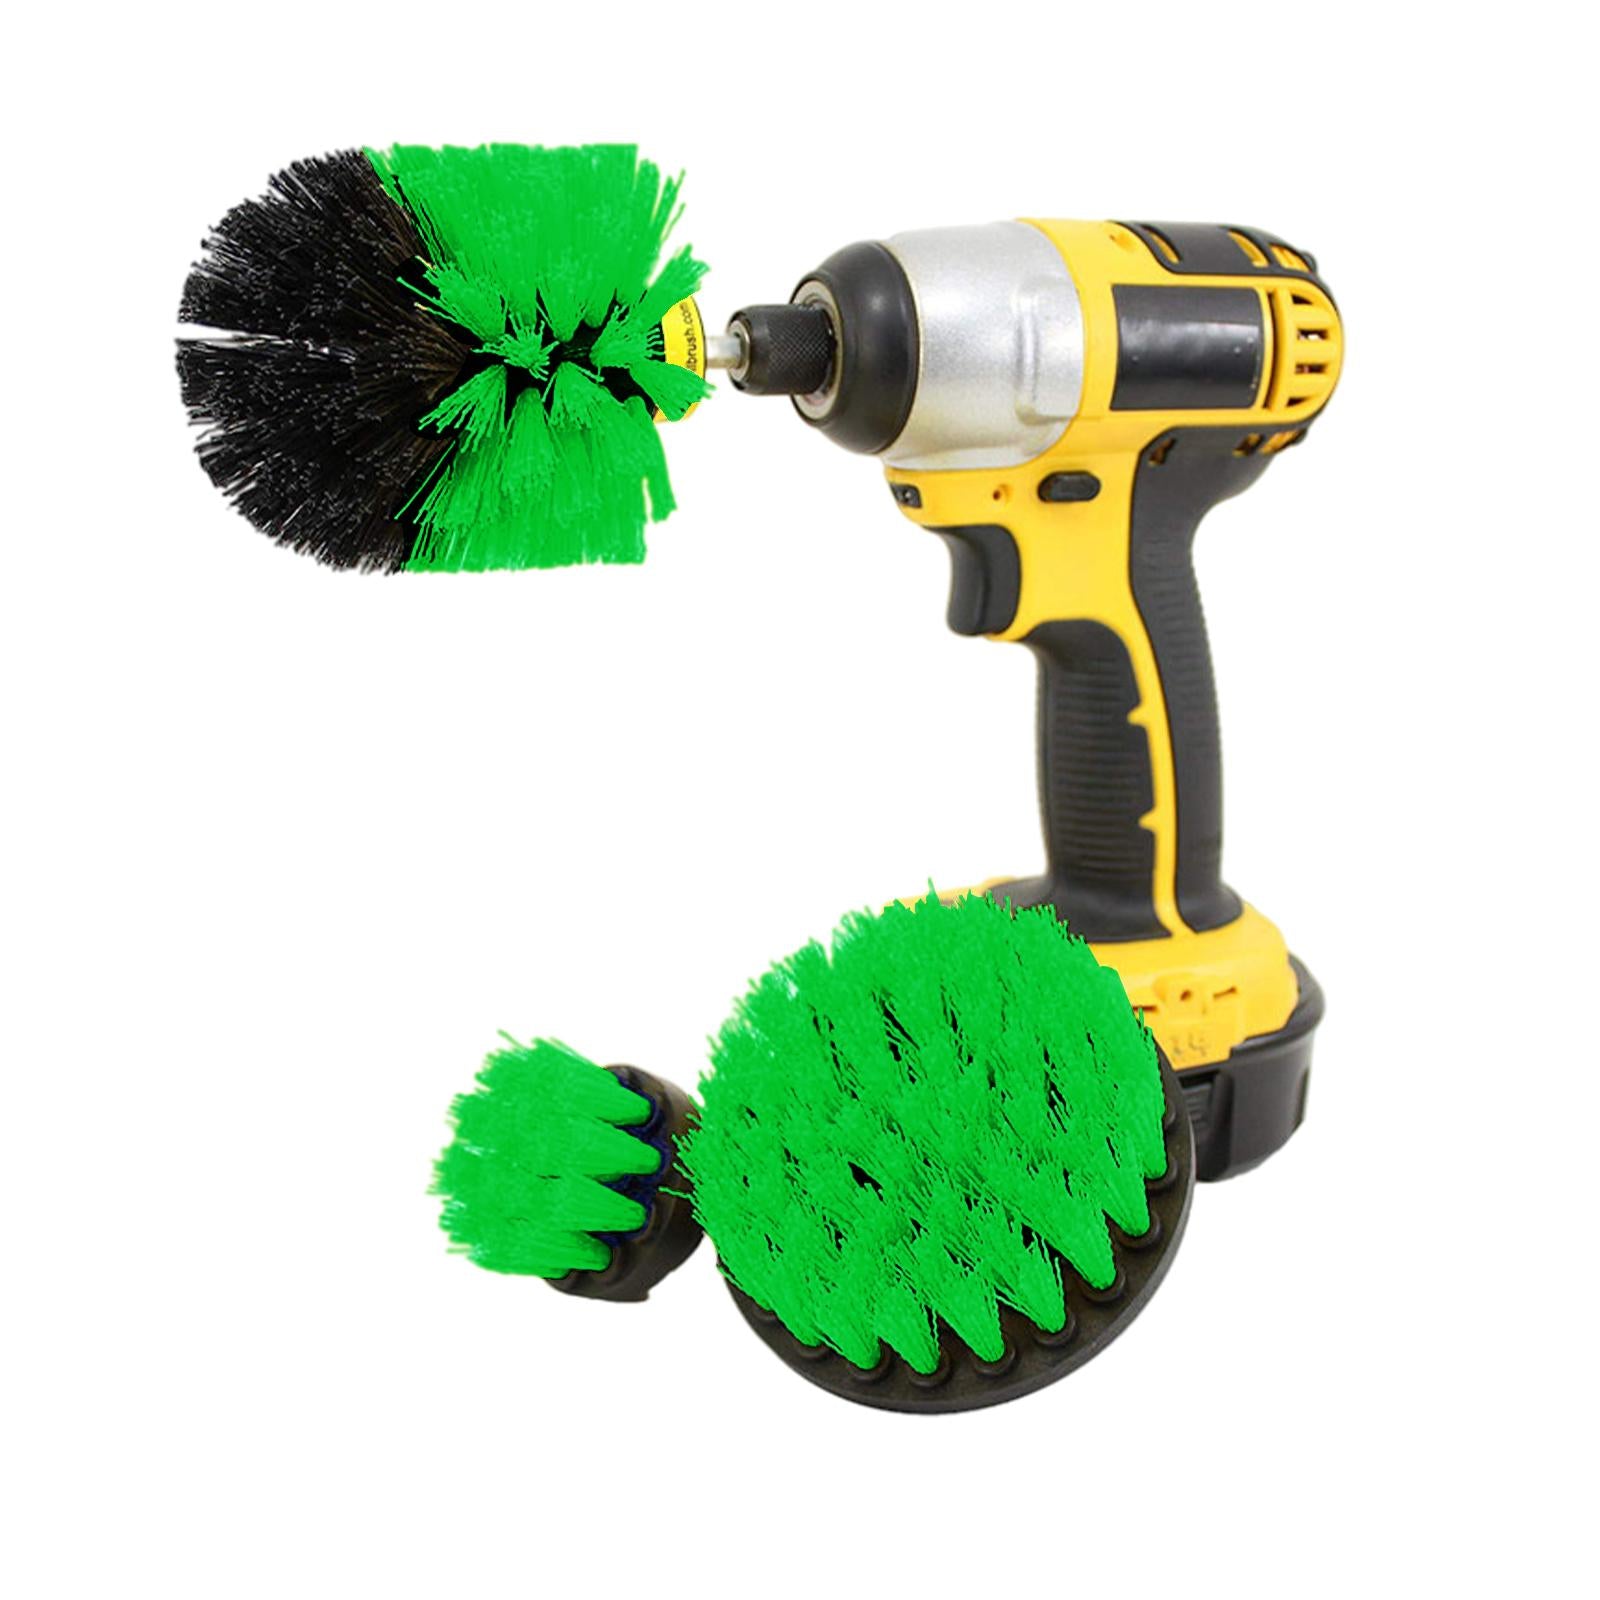 3x Drill Brush Power Scrubber All Purpose for Floors Bathroom Bathtub Green